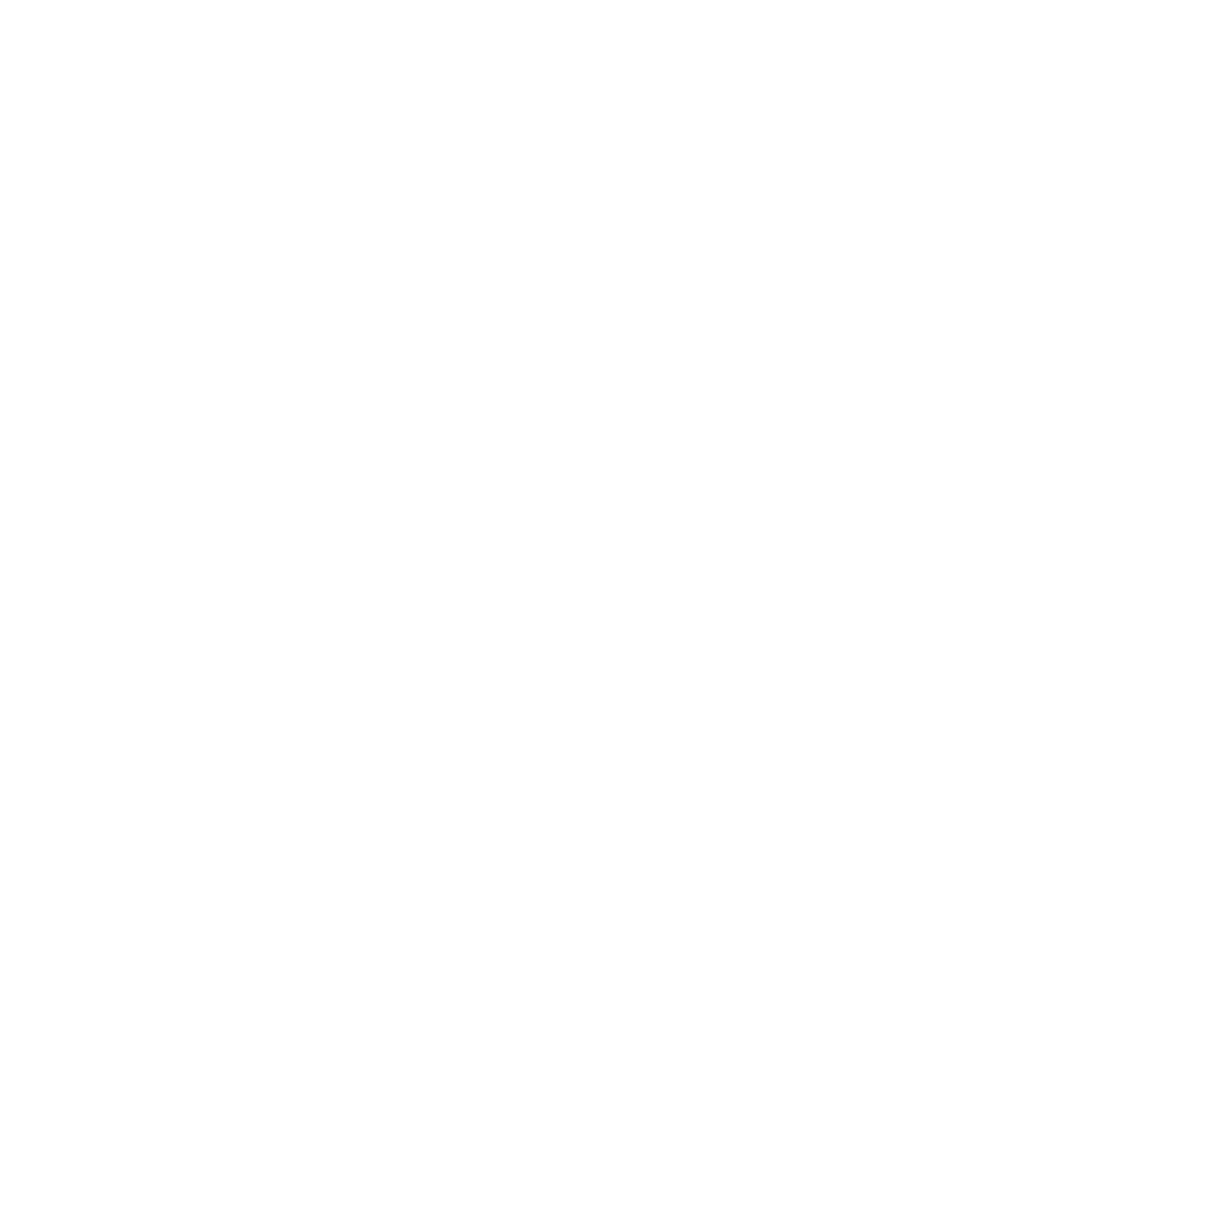 Unifirst Hotel Logo